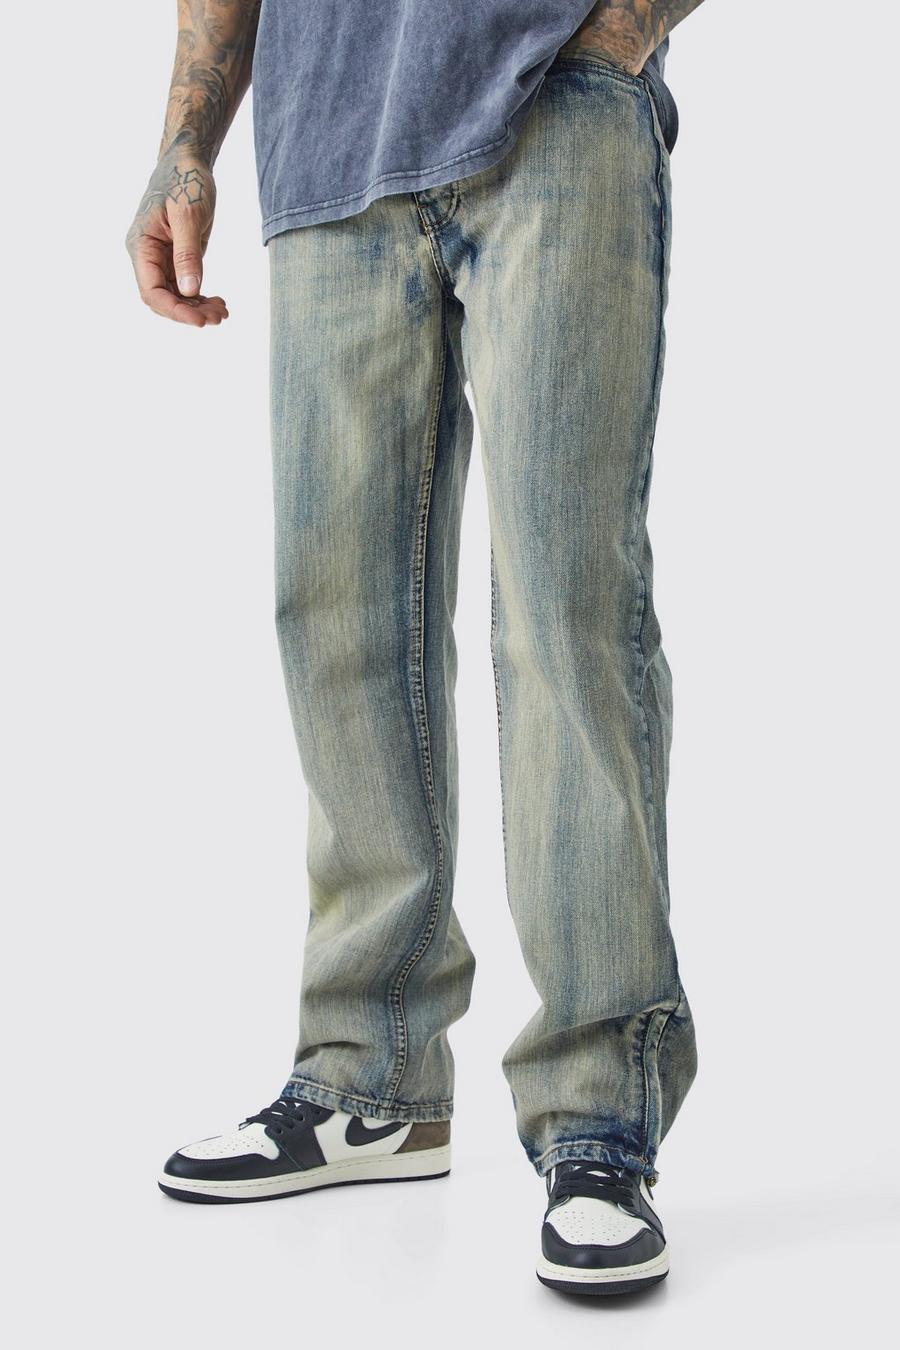 Jeans Tall rilassati in denim rigido con zip sul fondo, Antique wash image number 1